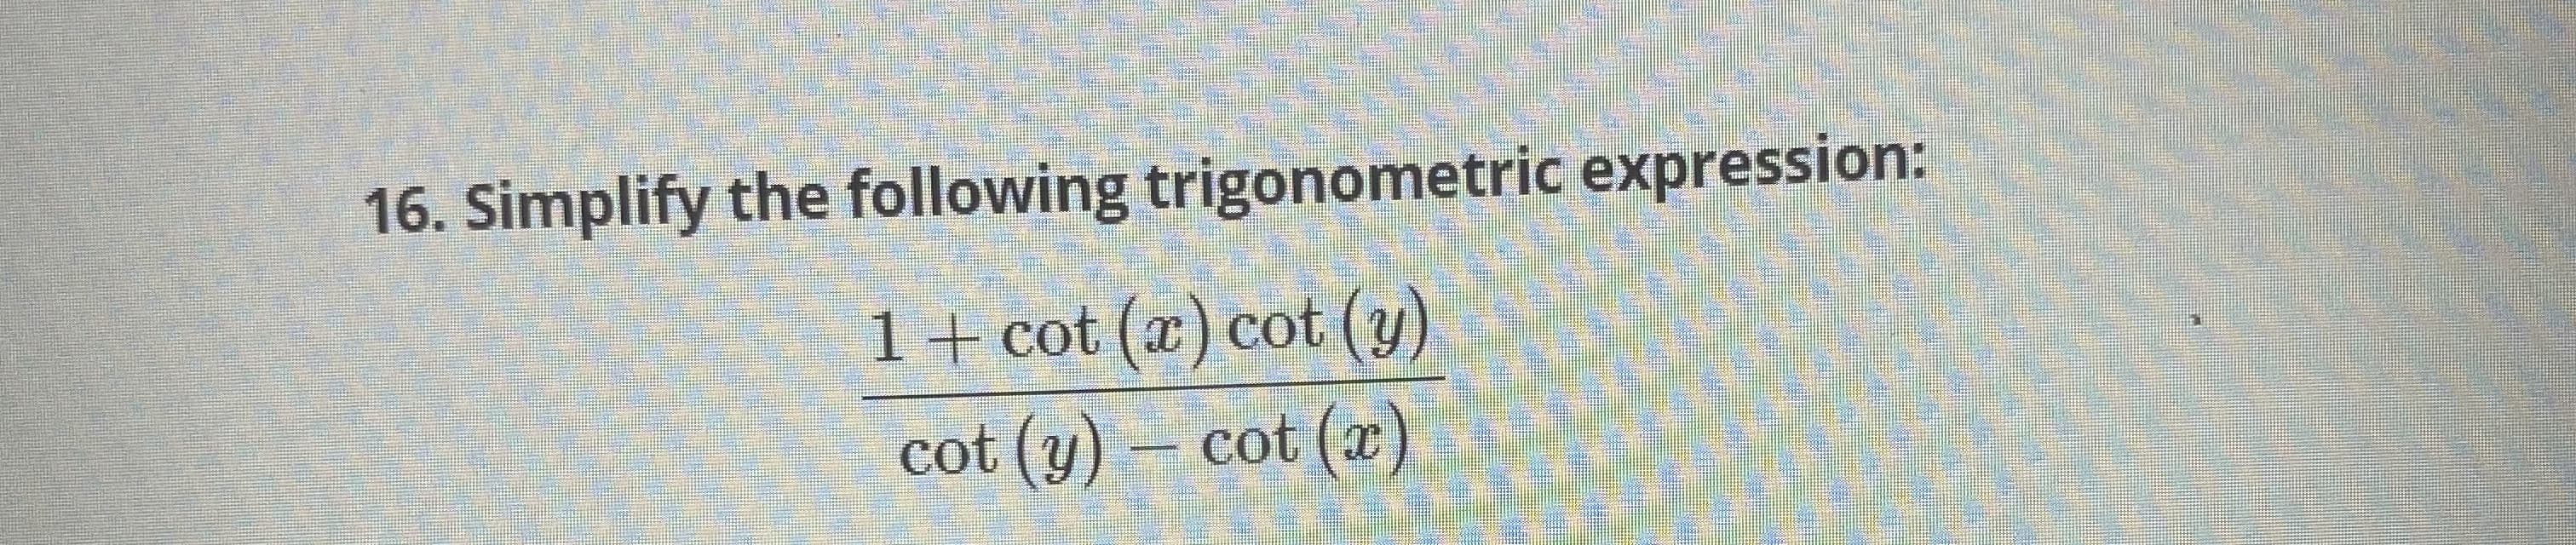 16. Simplify the following trigonometric expression:
1+ cot (x) cot (y)
cot (y) – cot (x)
